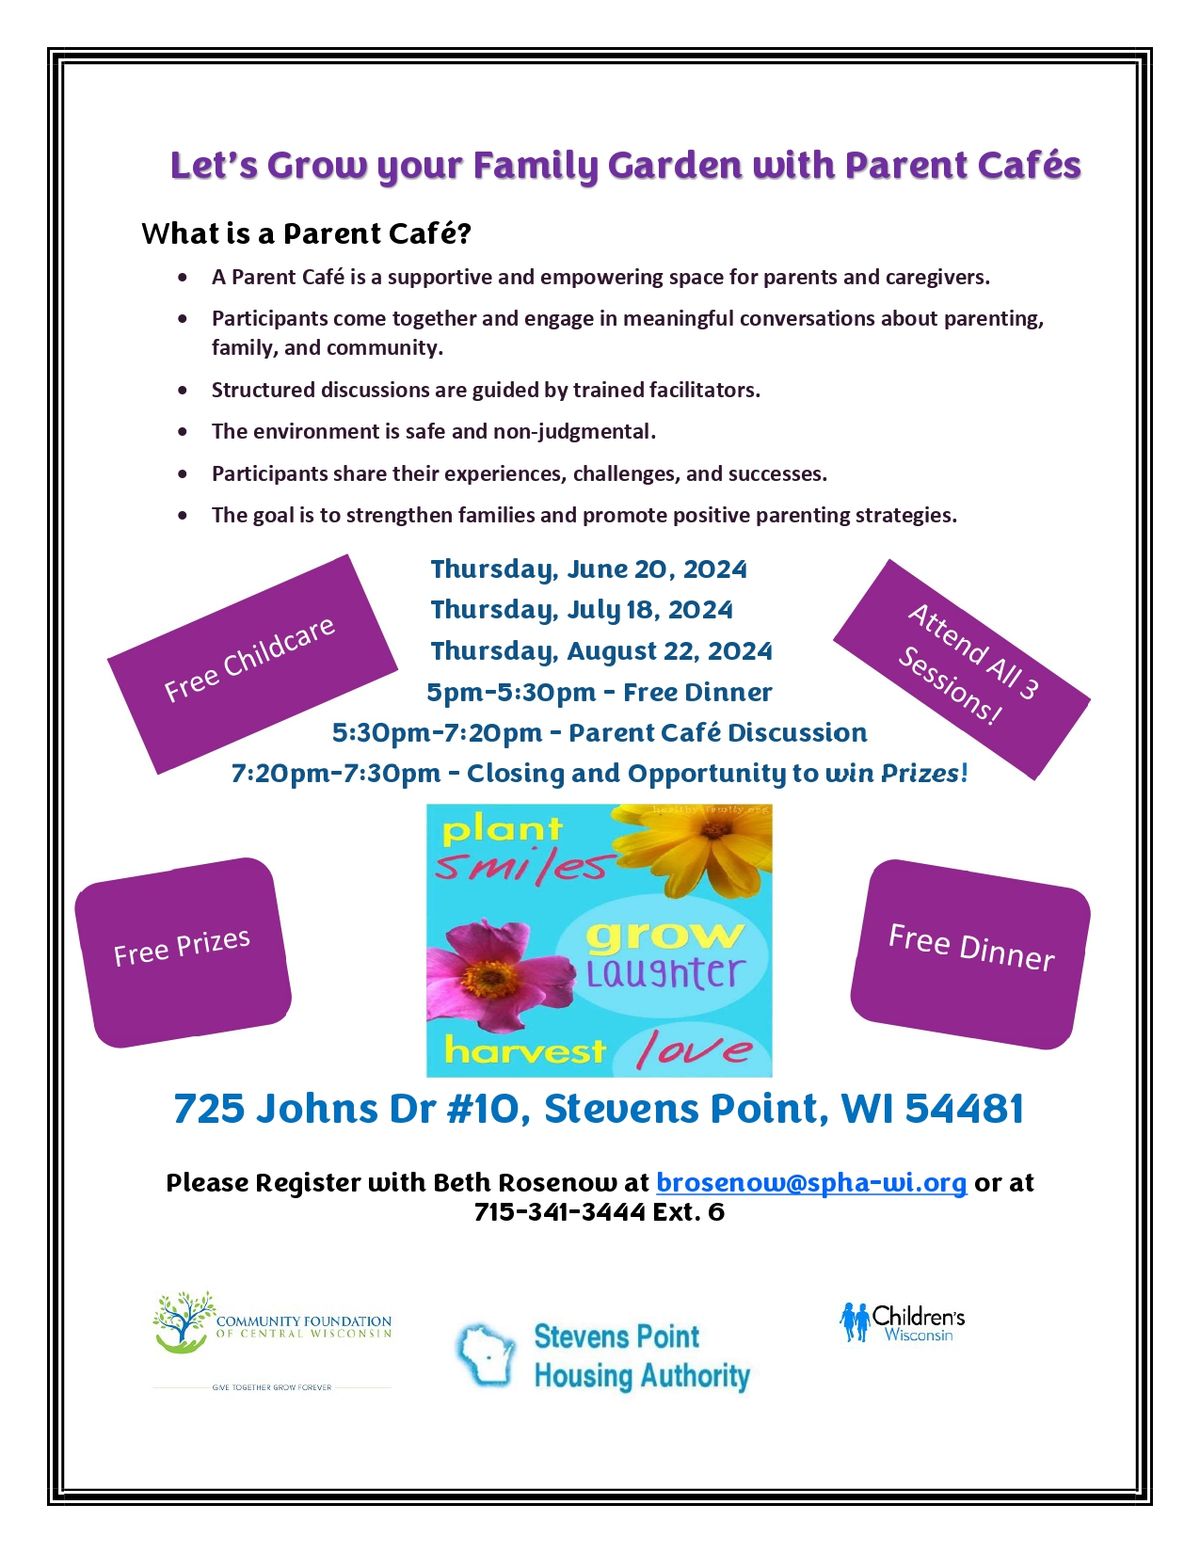 Parent Cafe Session 2 - Thursday, July 18, 2024